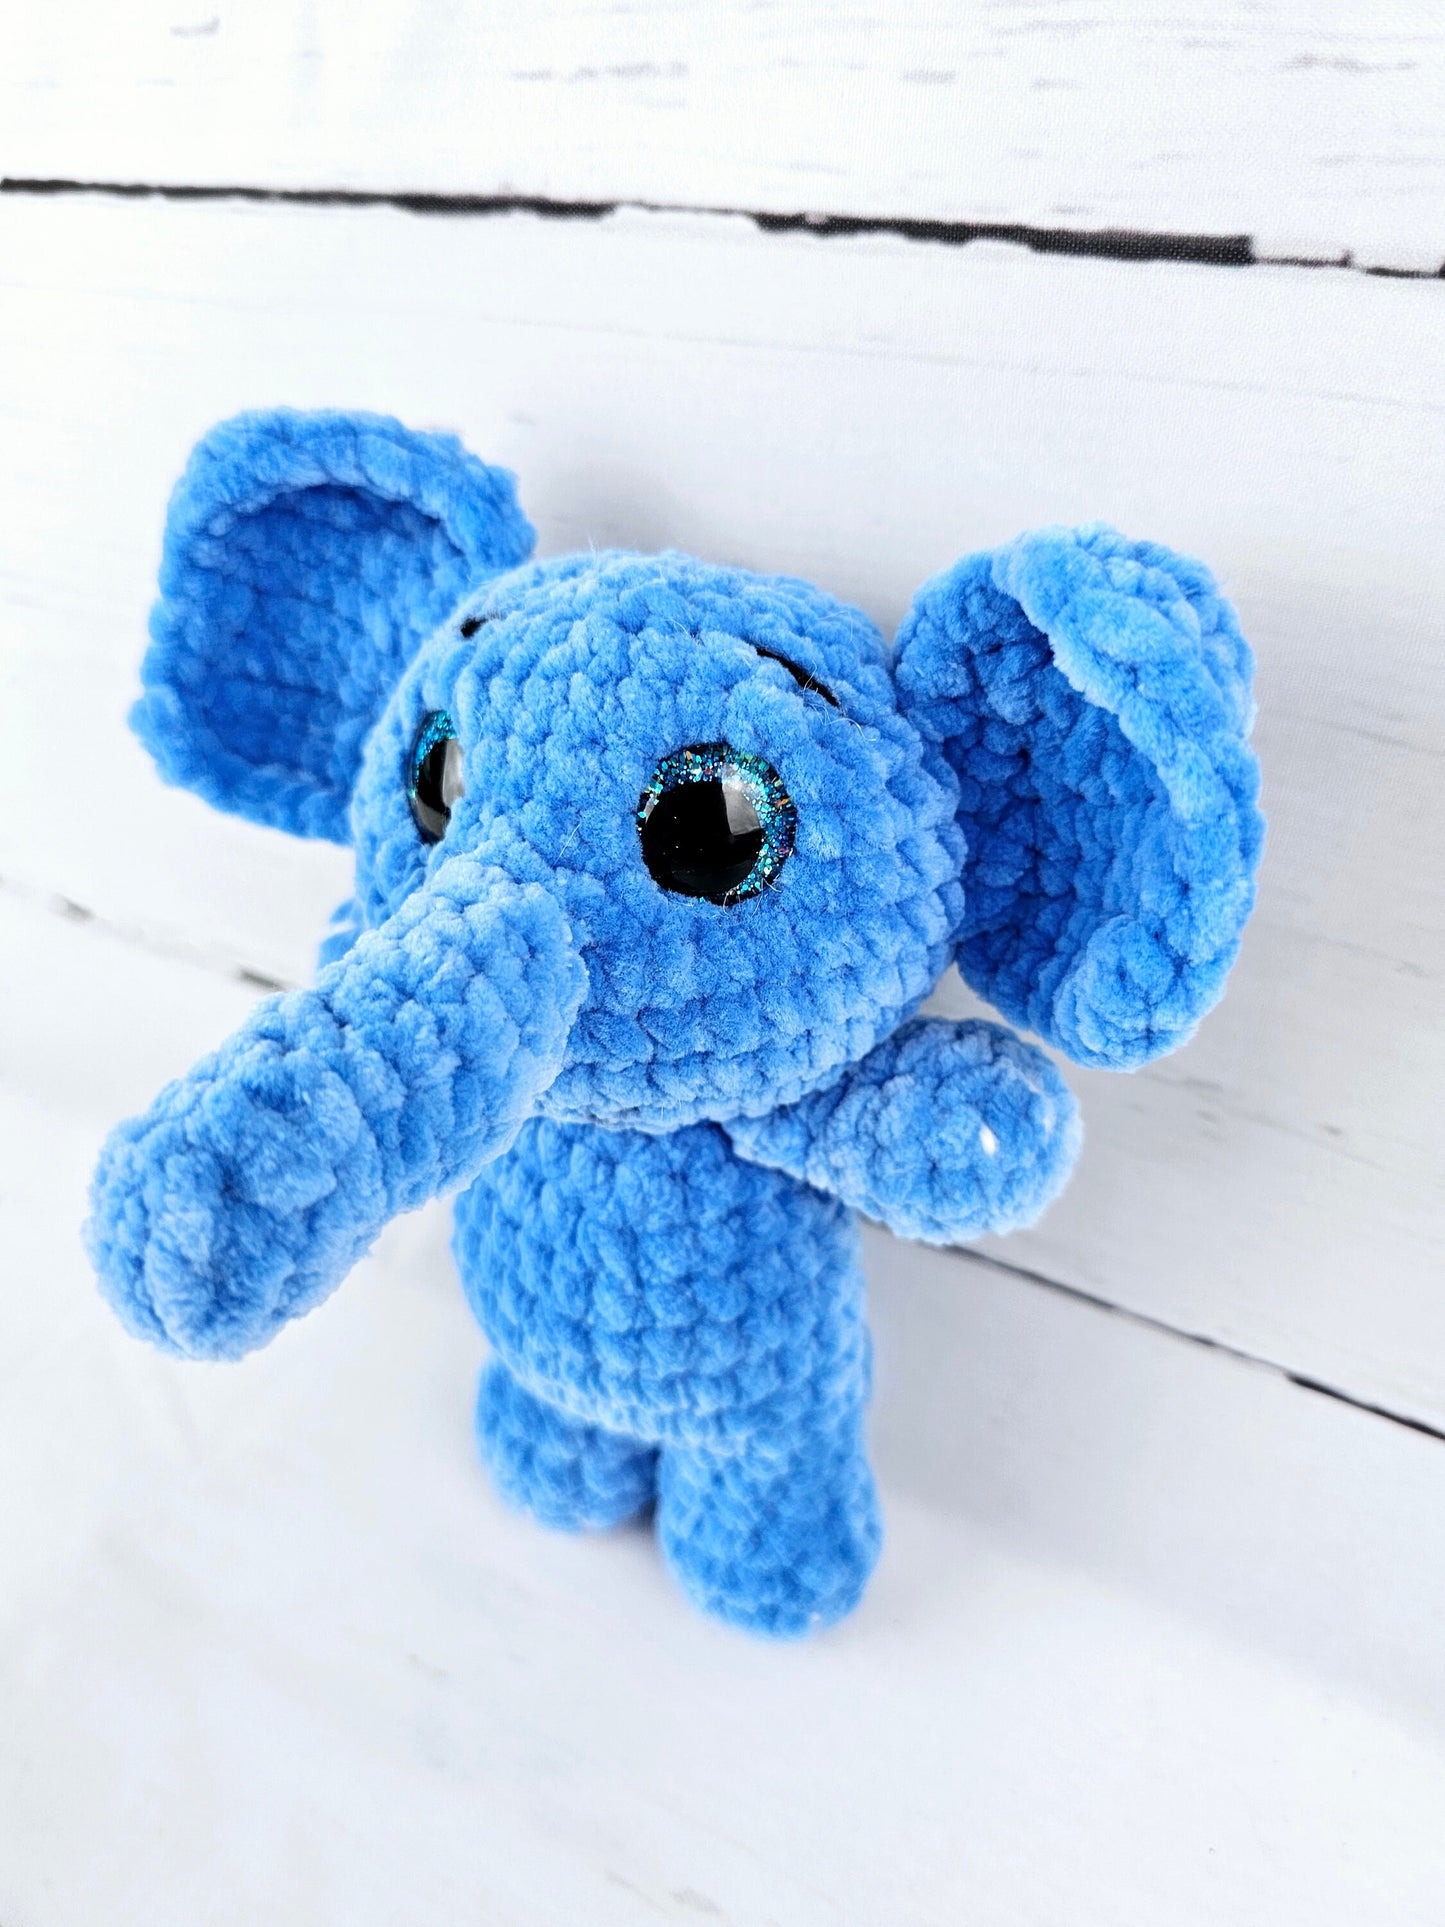 Crochet 6.5" Pocket Elephant (one elephant) in Chenille Yarn Plush Stuffed Animal Handmade